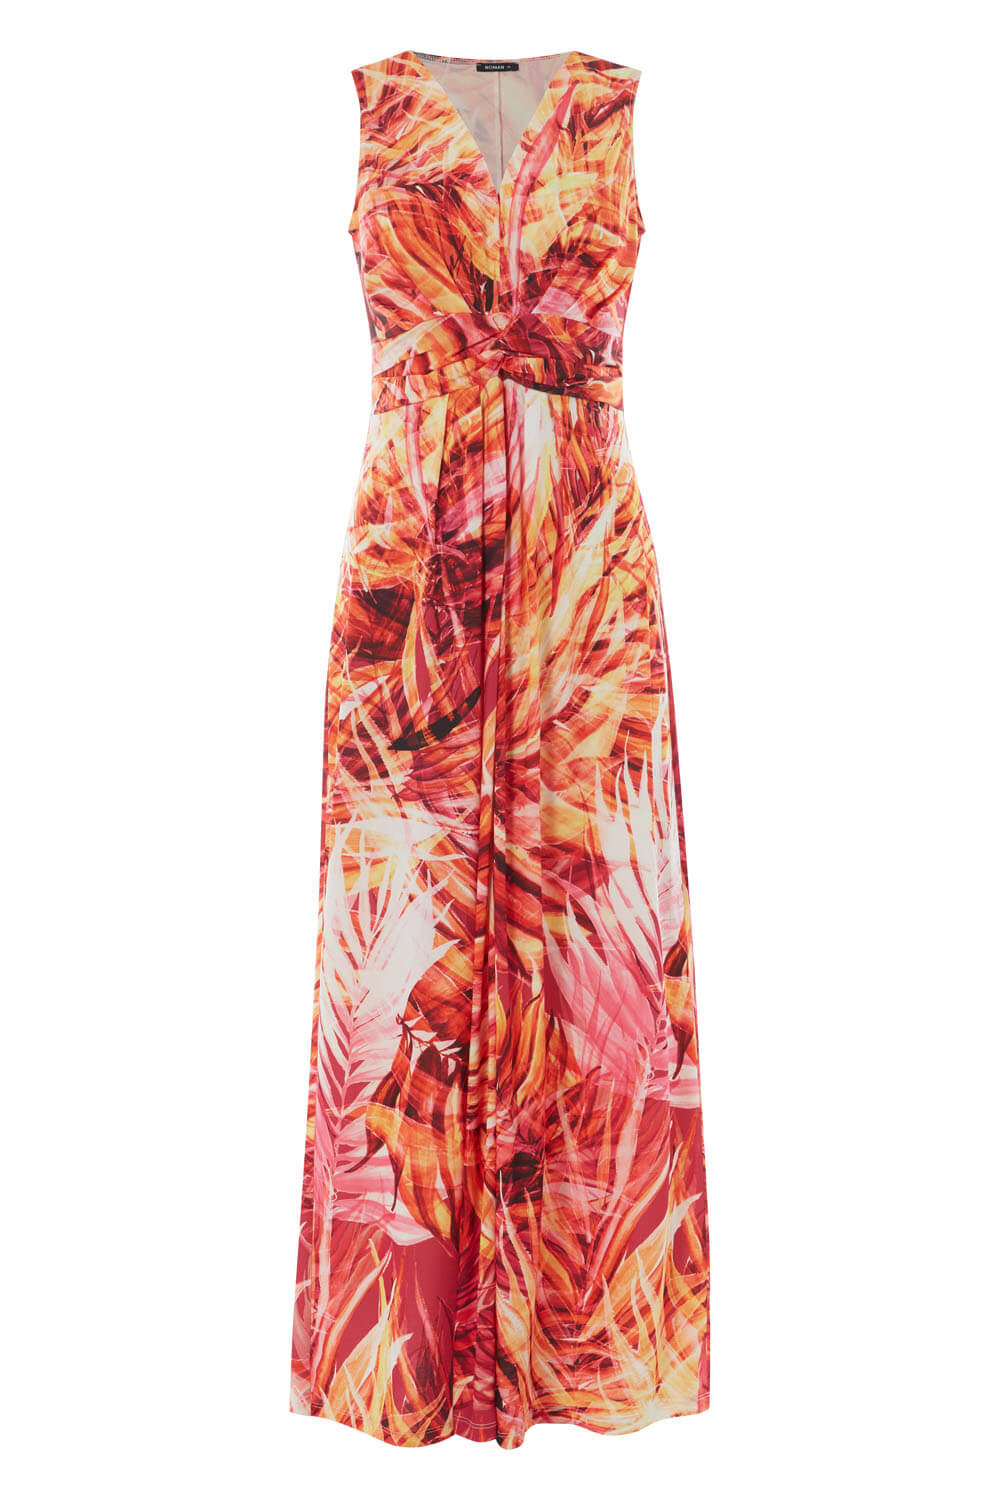 ORANGE Tropical Print Twist Front Maxi Dress, Image 5 of 5